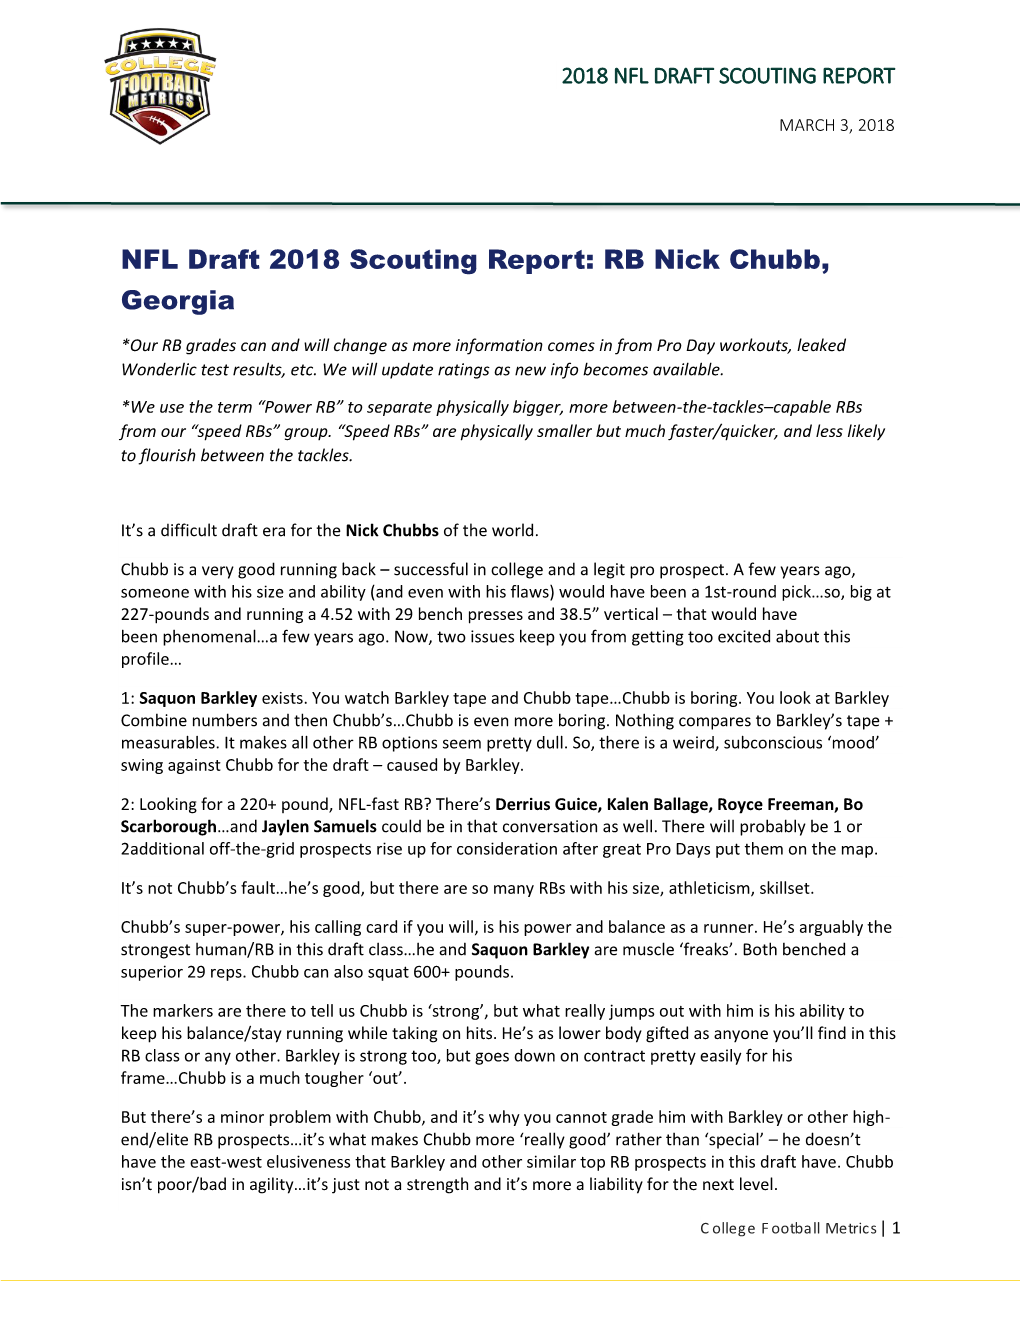 NFL Draft 2018 Scouting Report: RB Nick Chubb, Georgia